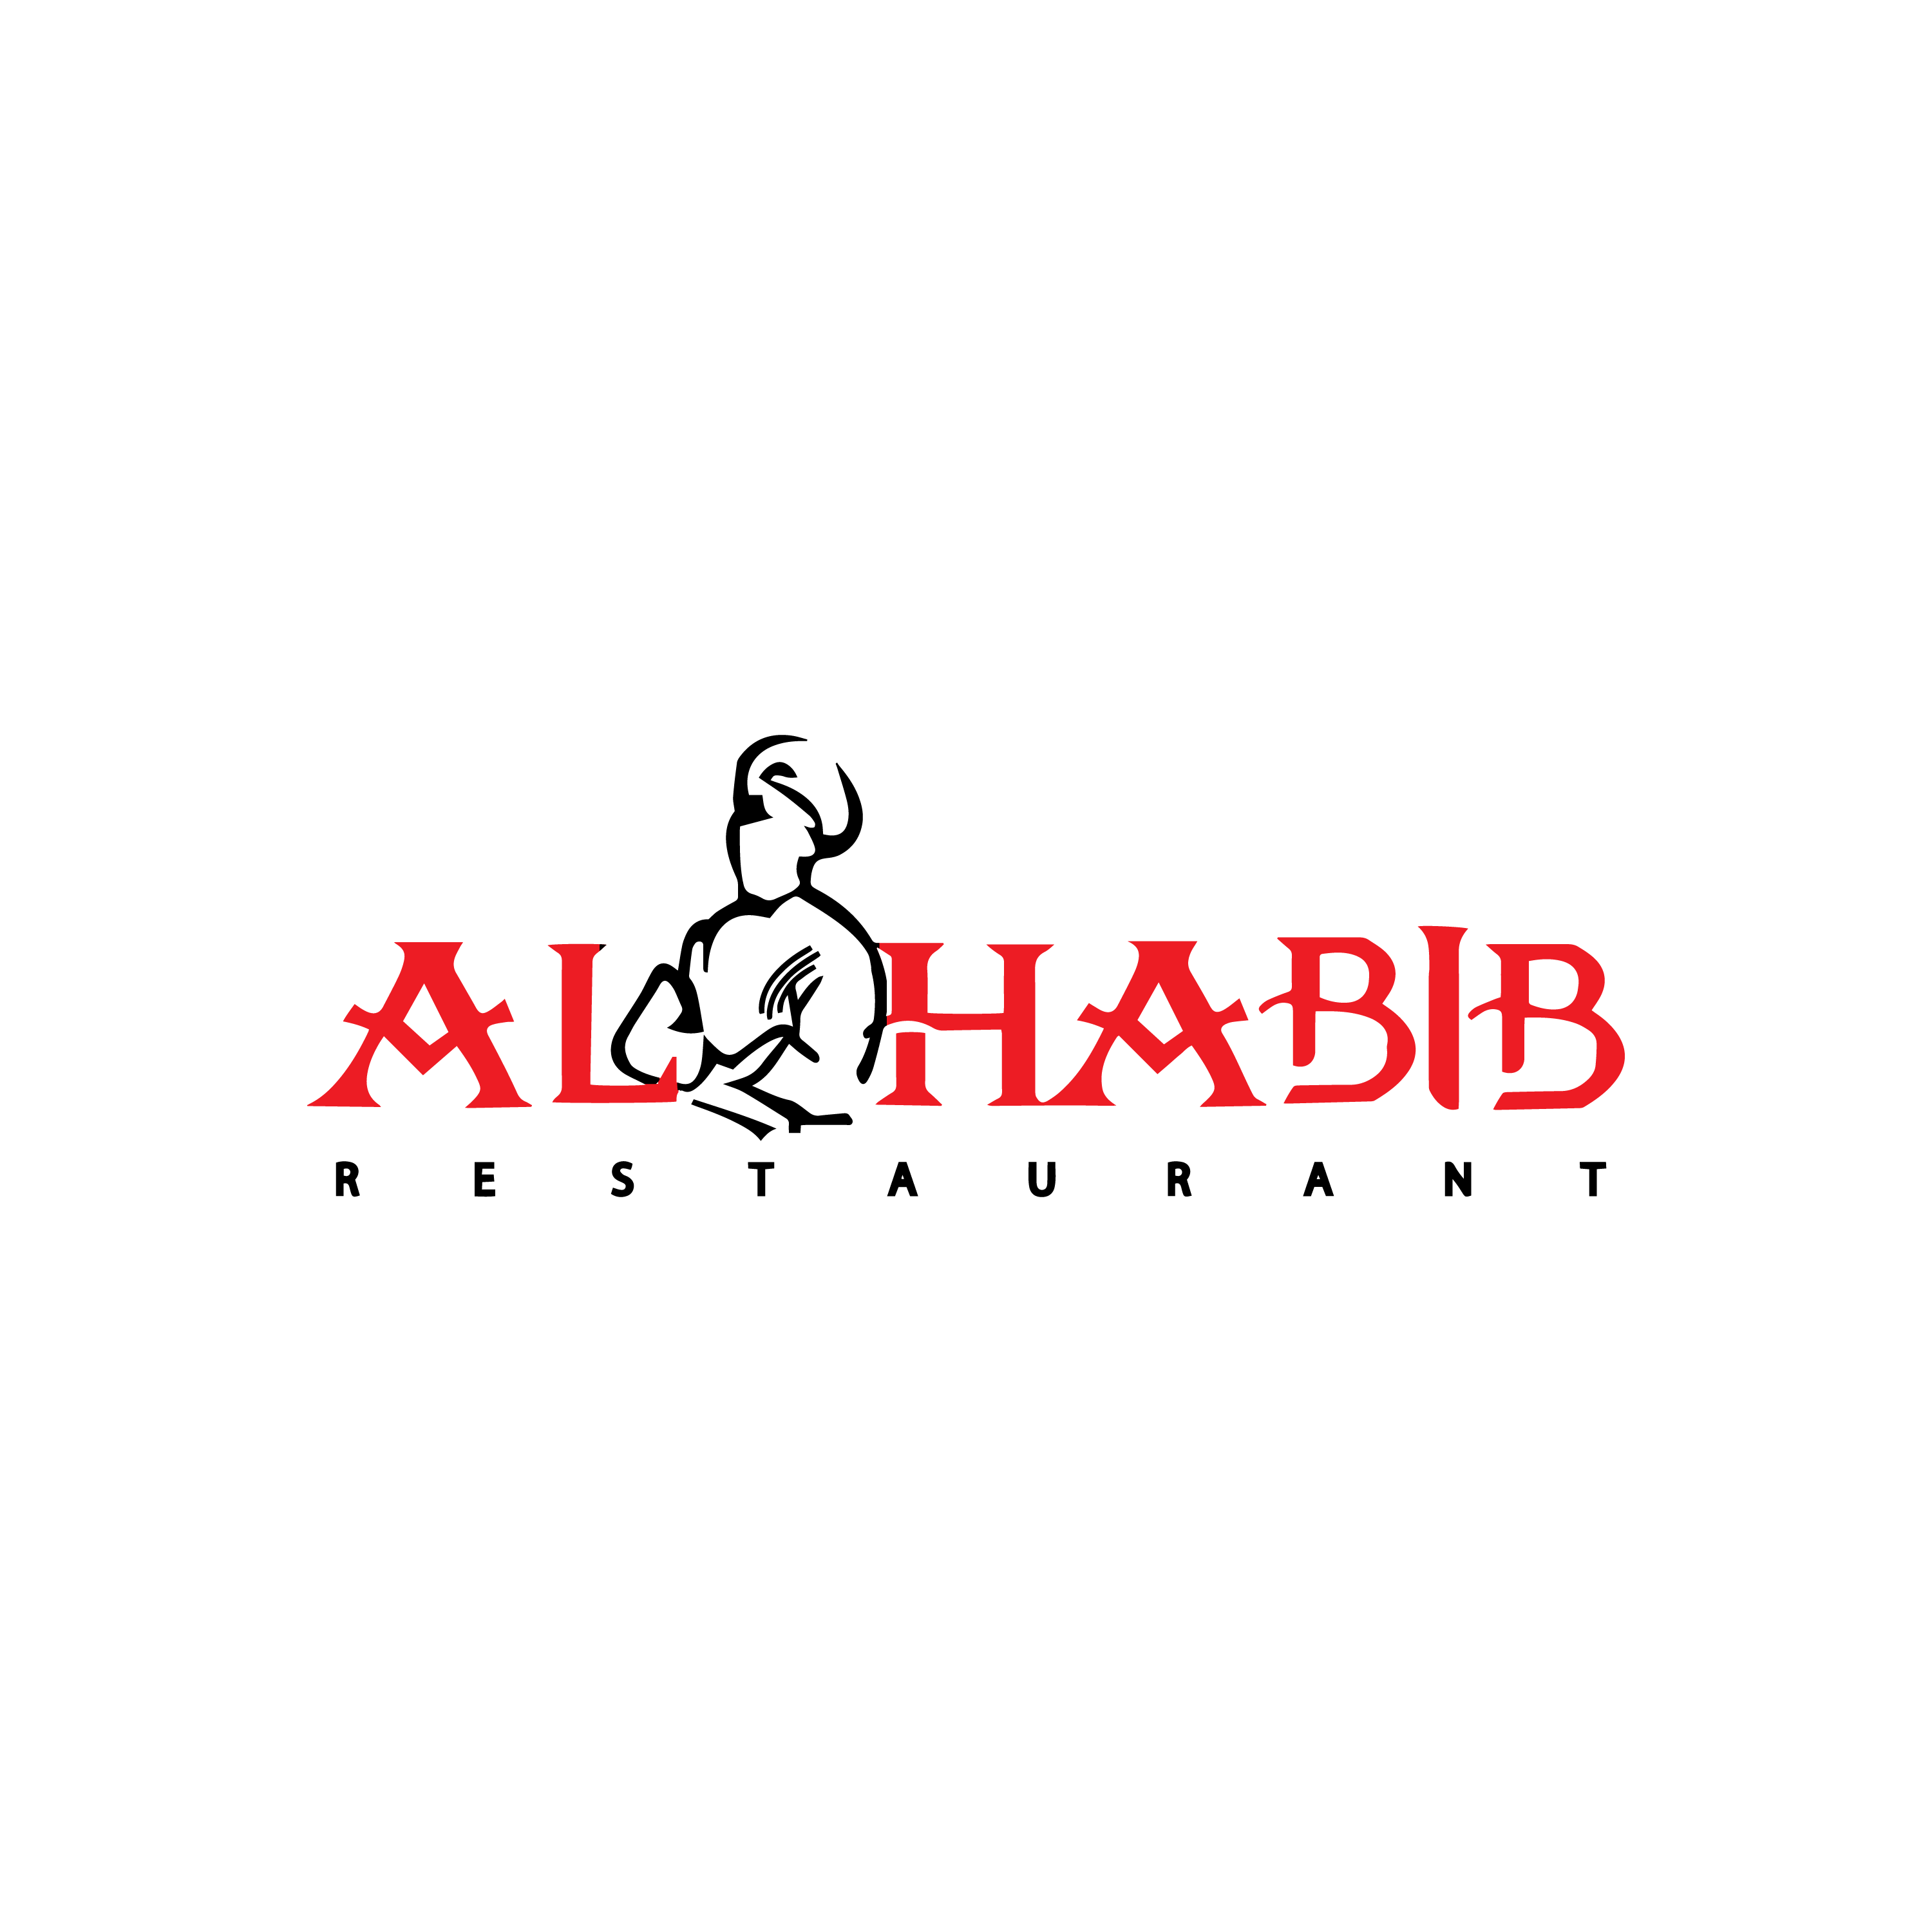 al habib